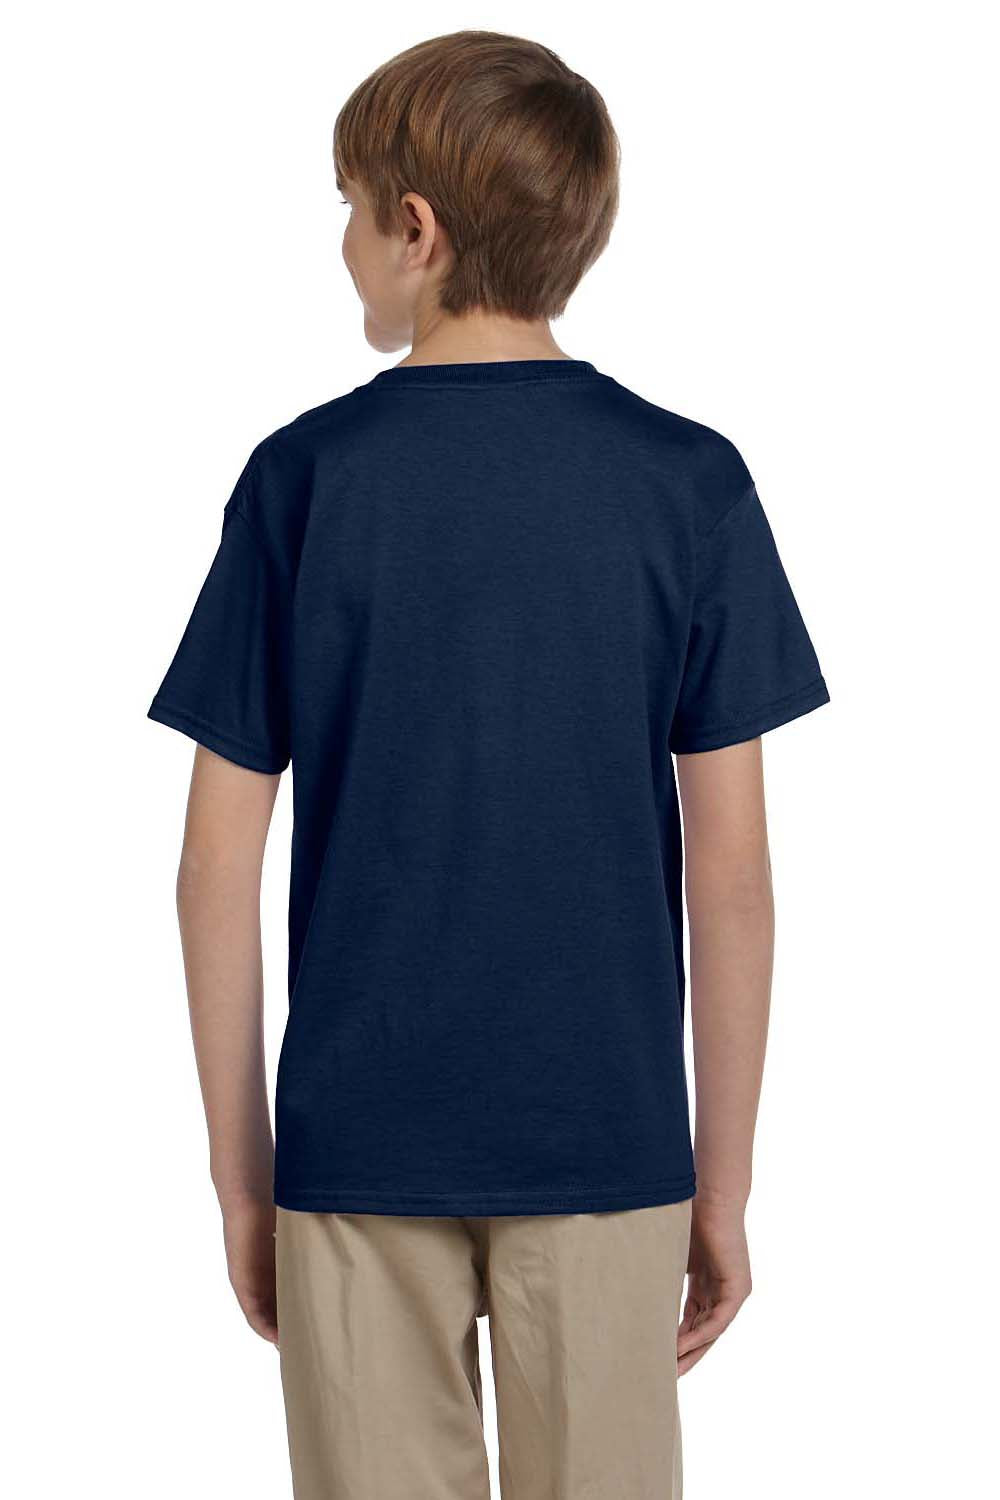 Fruit Of The Loom 3931B Youth HD Jersey Short Sleeve Crewneck T-Shirt Navy Blue Back